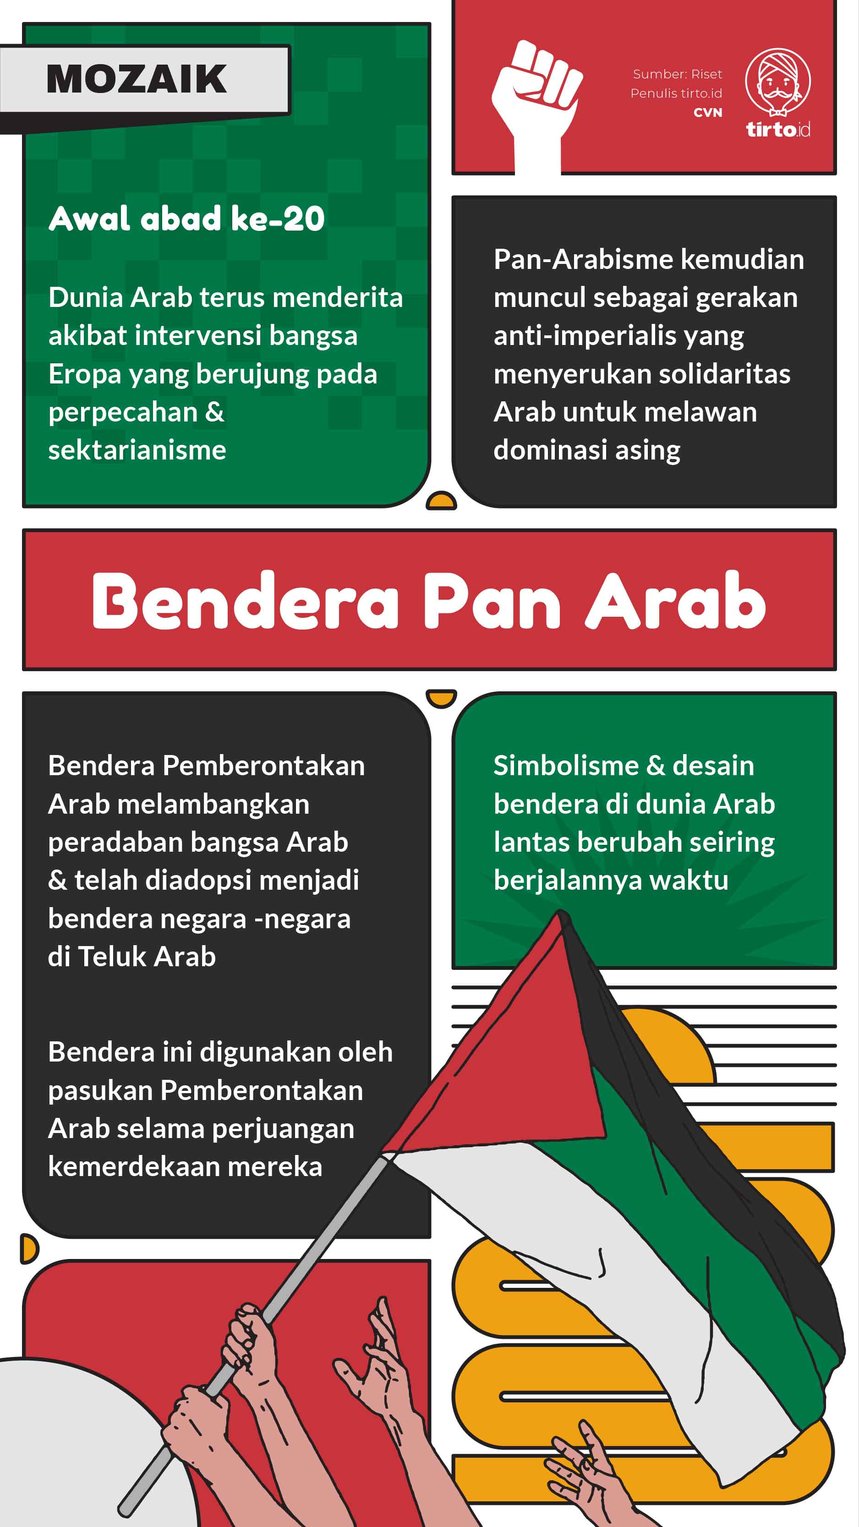 Infografik Mozaik Bendera Pan Arab